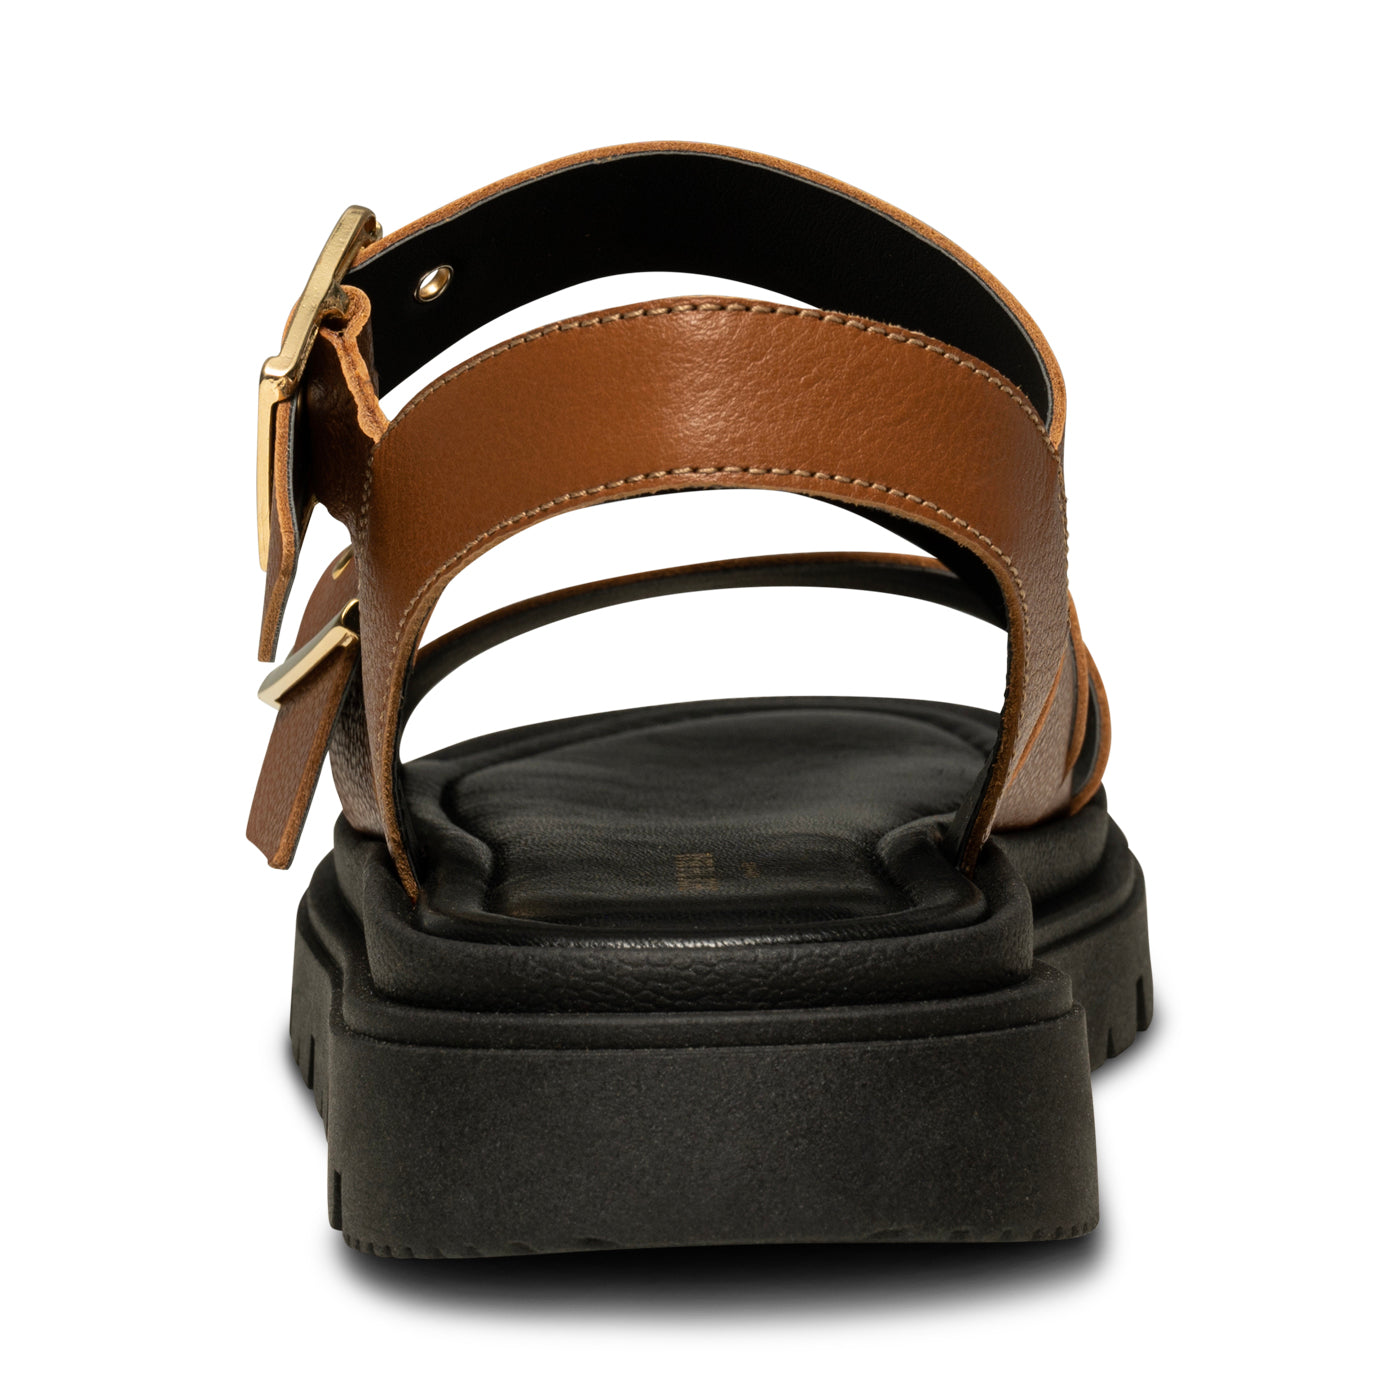 SHOE THE BEAR WOMENS Rebecca Buckle Leather Sandal Sandals 132 COGNAC